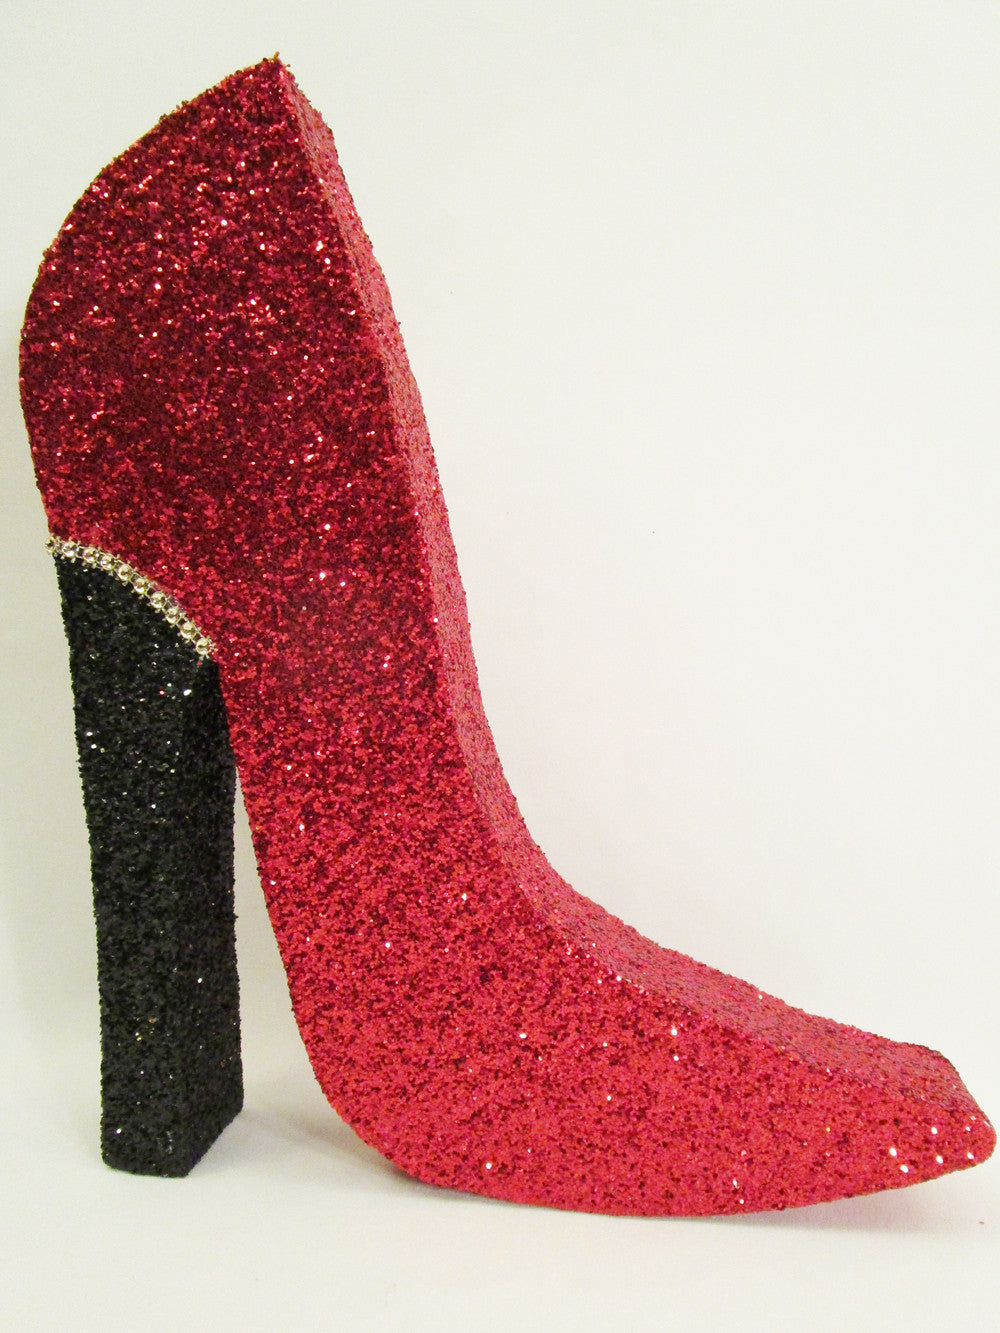 Styrofoam Red High heel shoe with black heel - Designs by Ginny